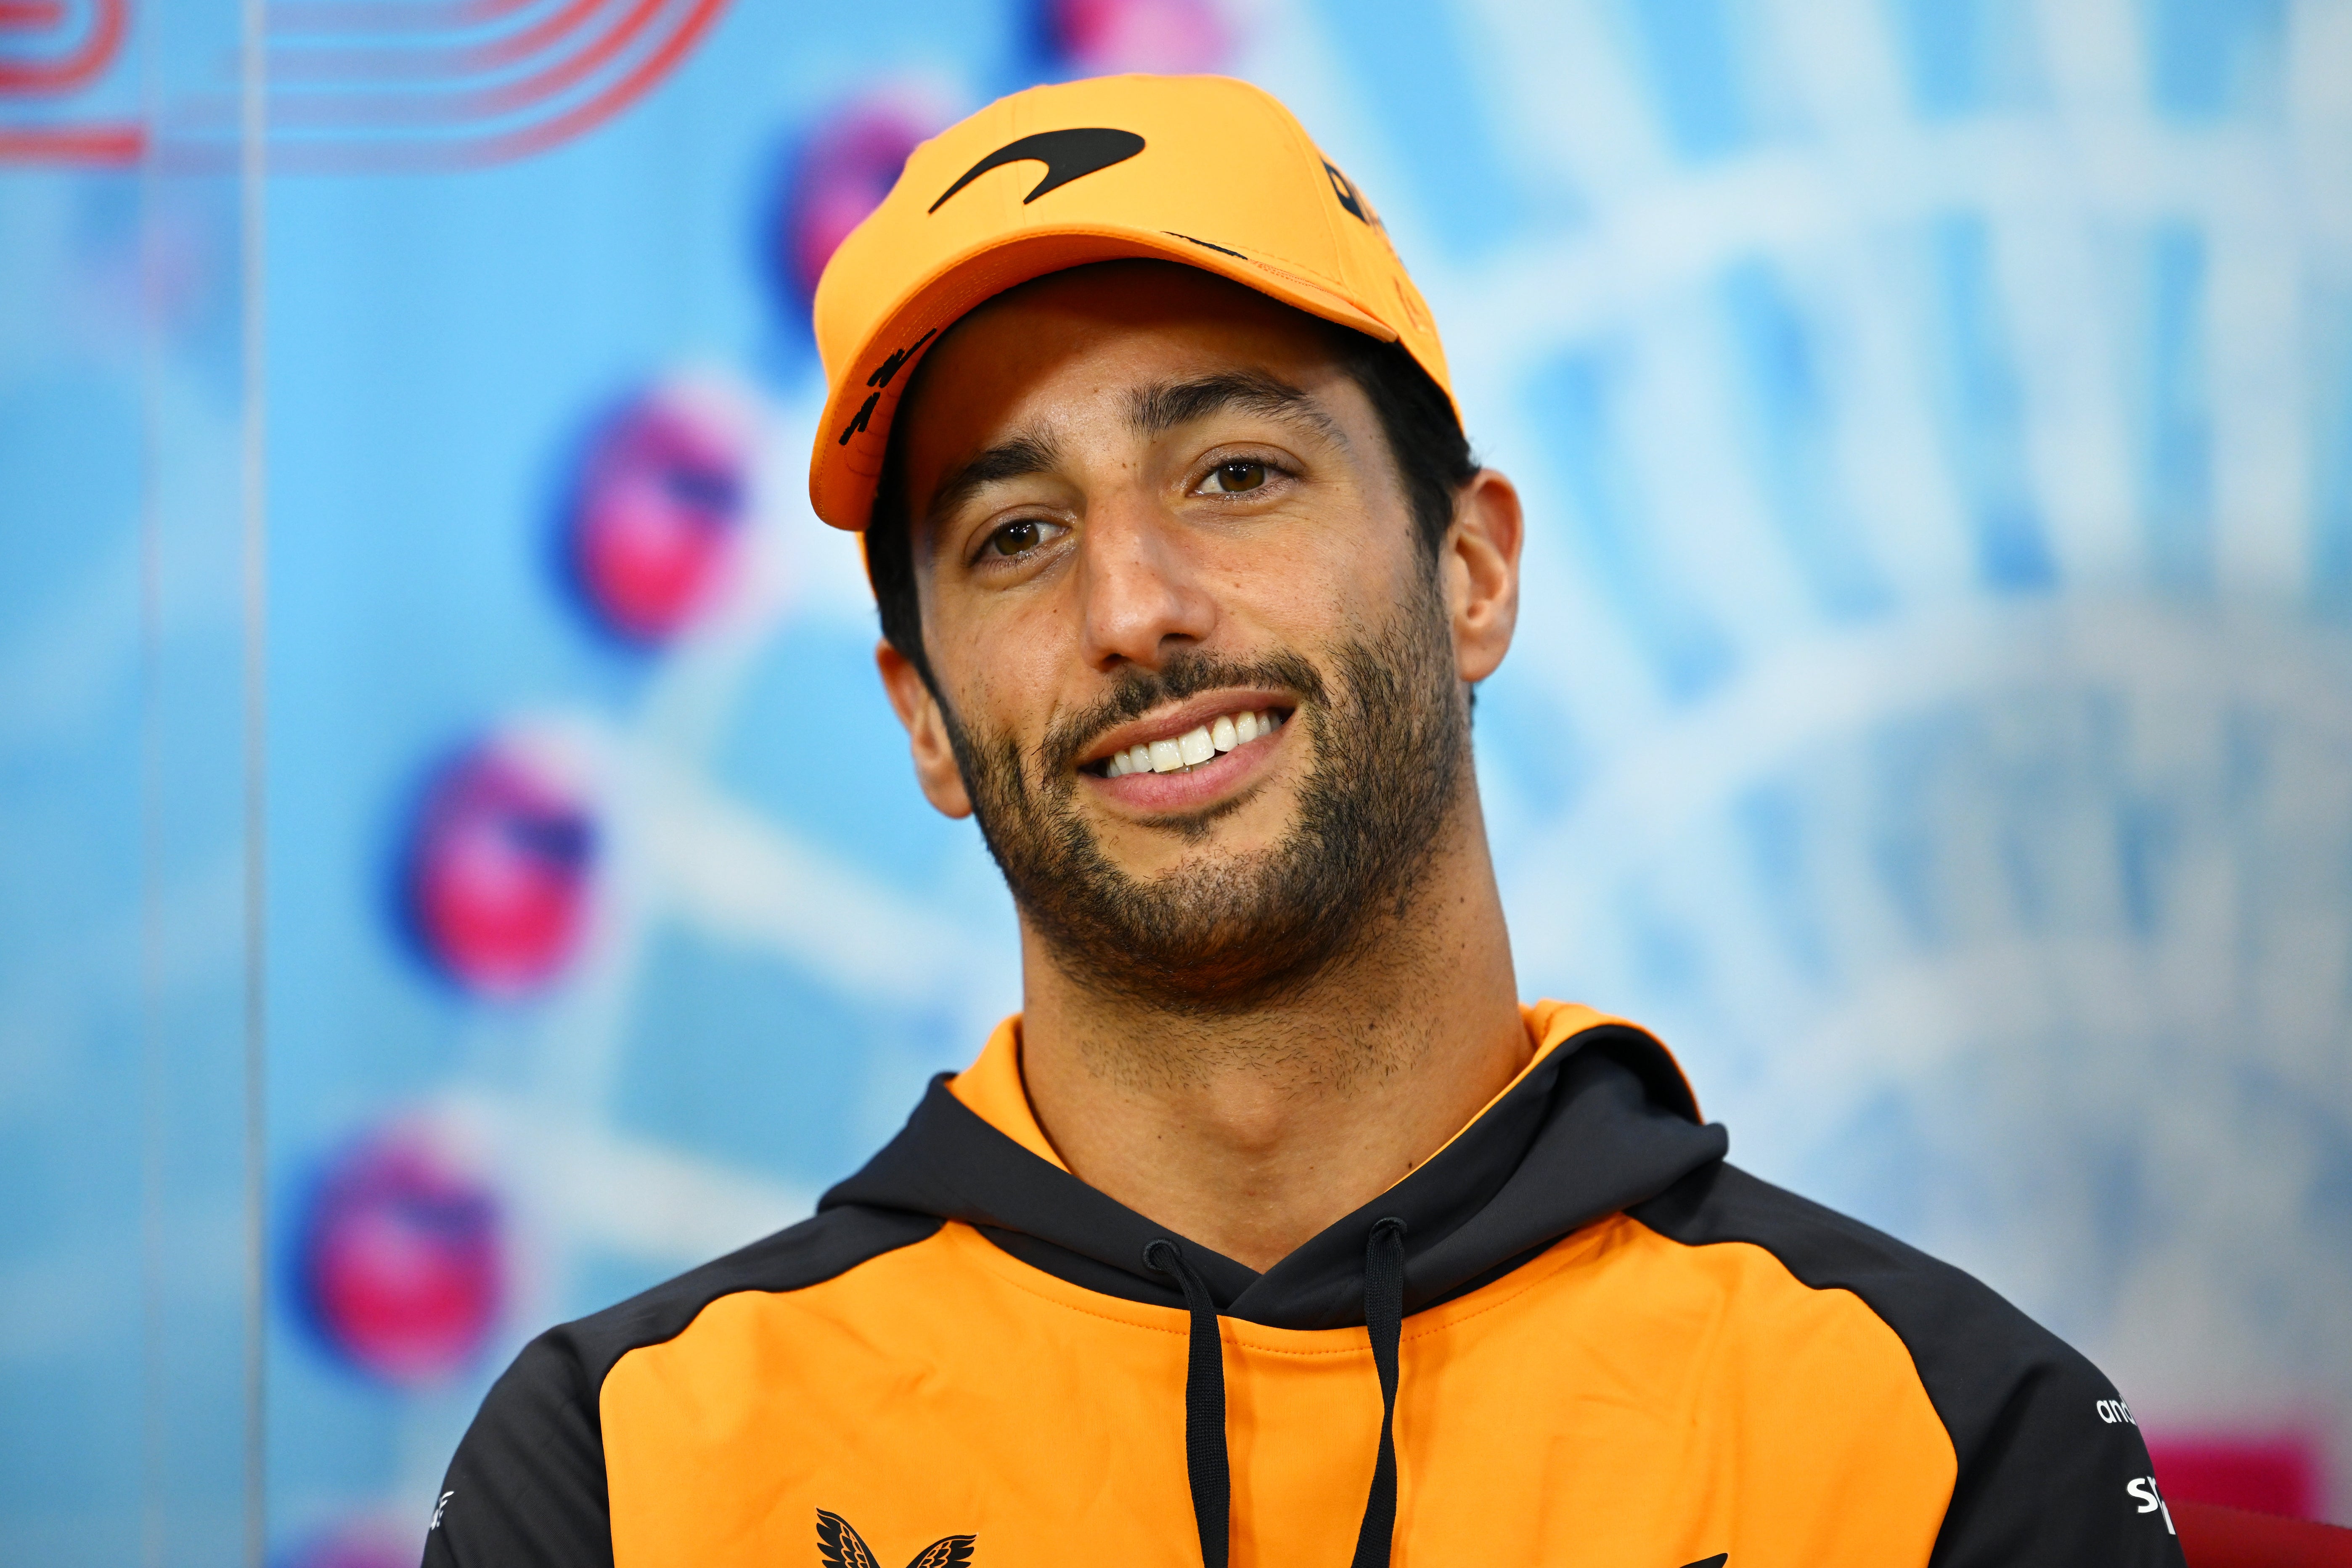 Daniel Ricciardo insists he won’t be rushed into any decision regarding his F1 future